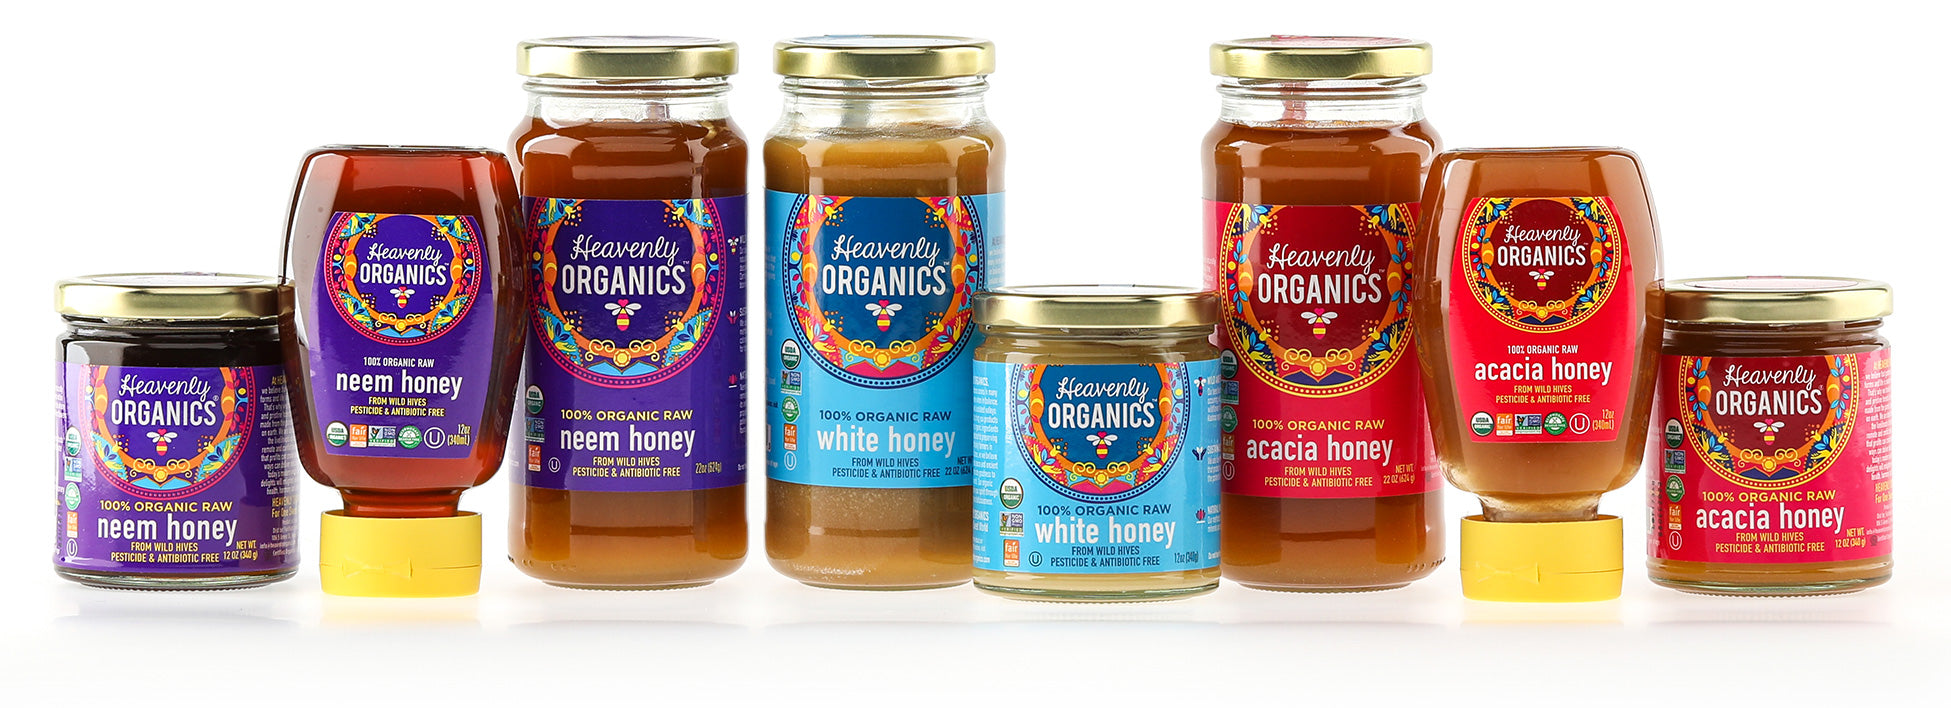 Heavenly Organics Product Lineup- Honey and Chocolate Patties!